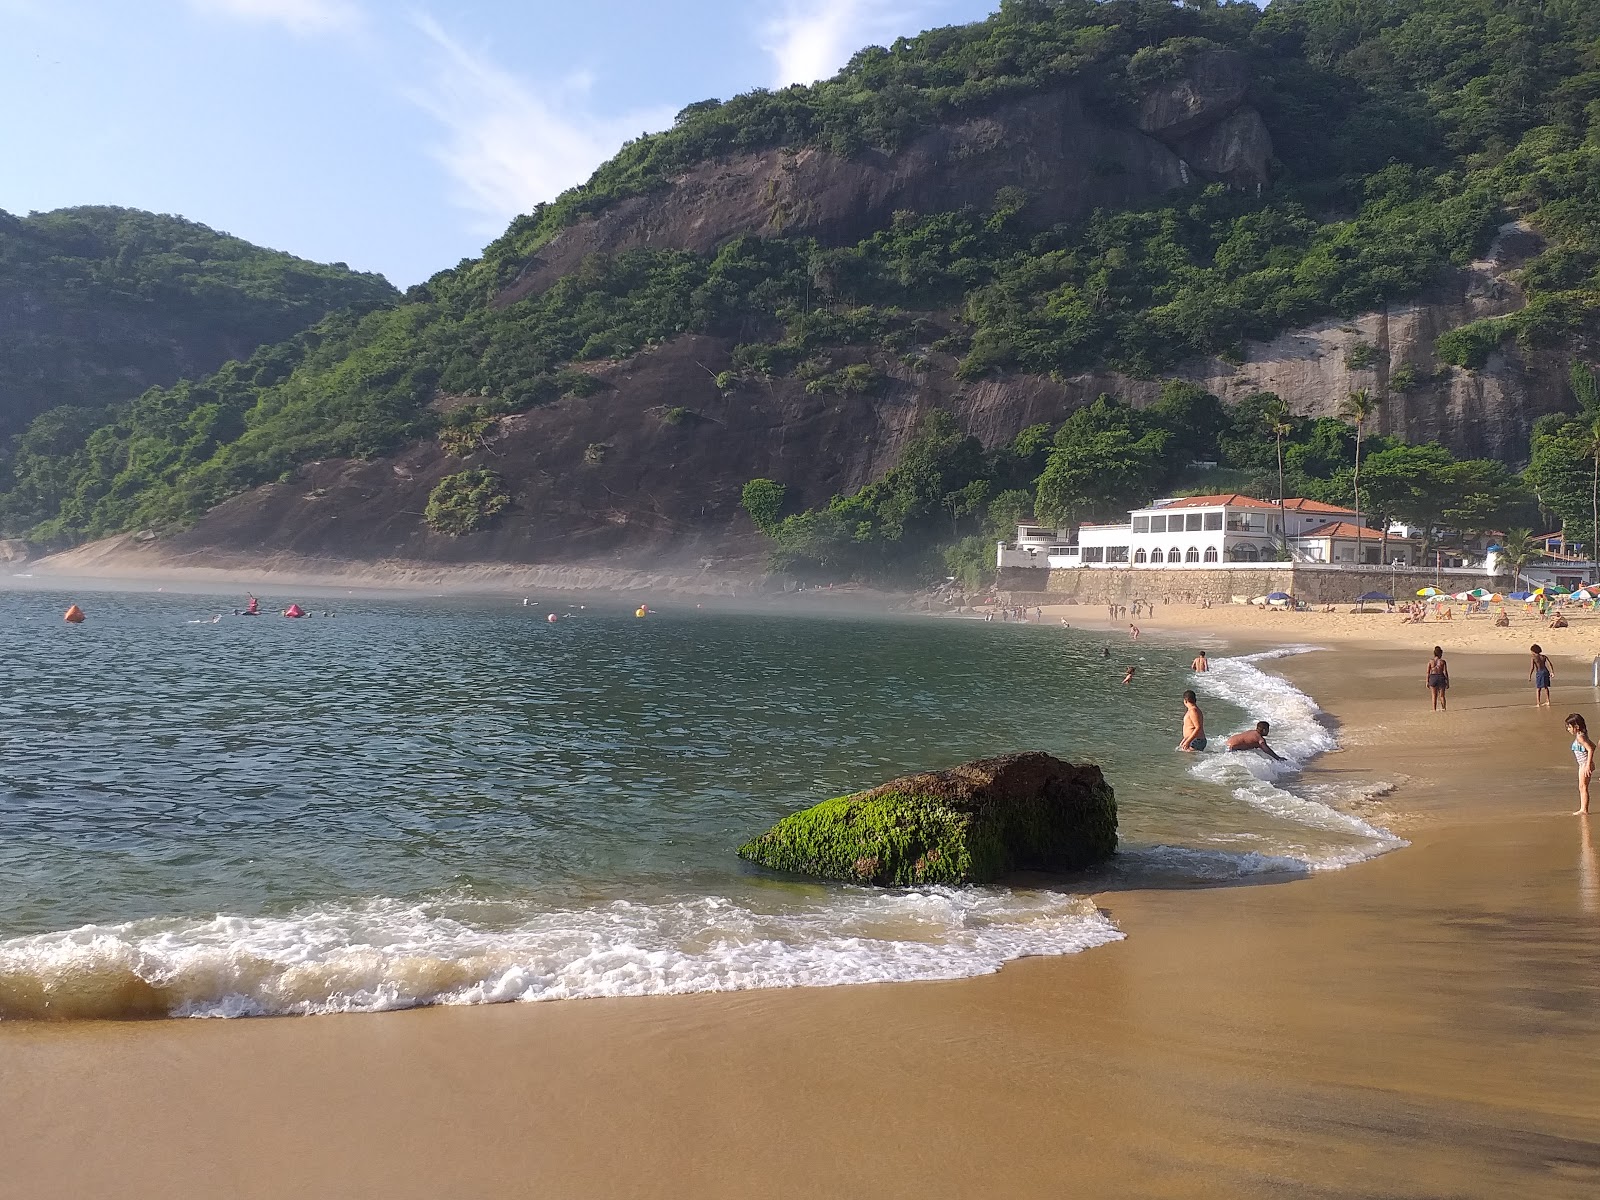 Fotografija Plaža Vermelha z prostoren zaliv